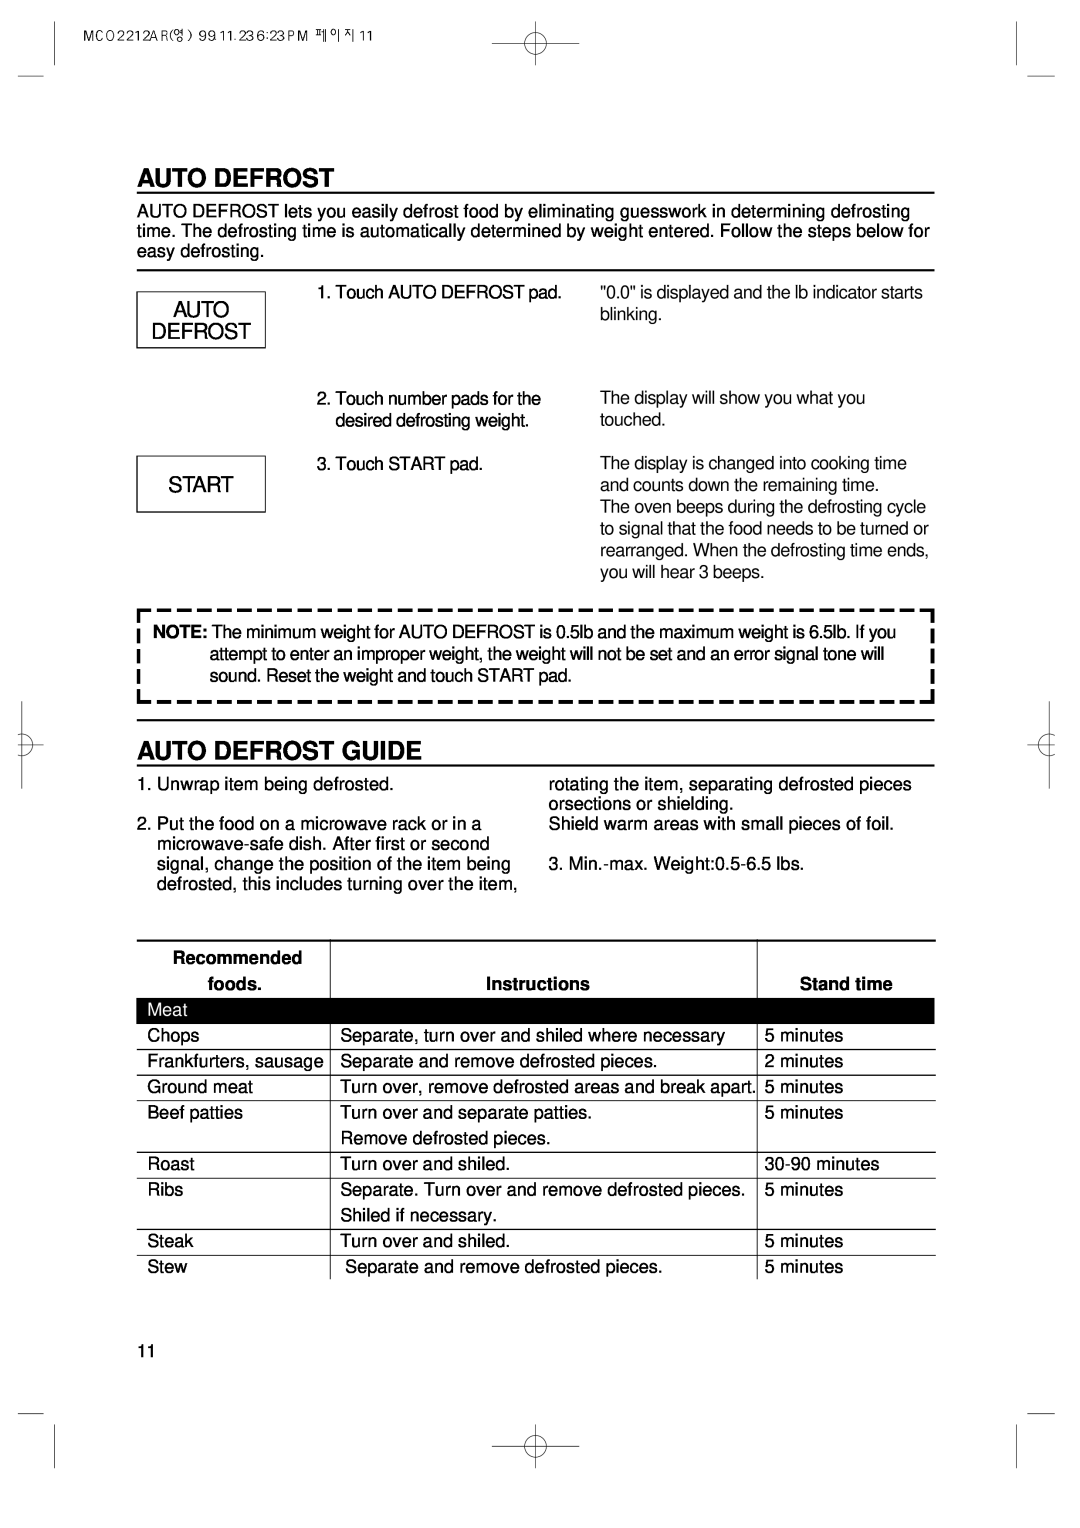 Magic Chef MCO2212AR manual Auto Defrost Guide, Auto Defrost Start, Meat 